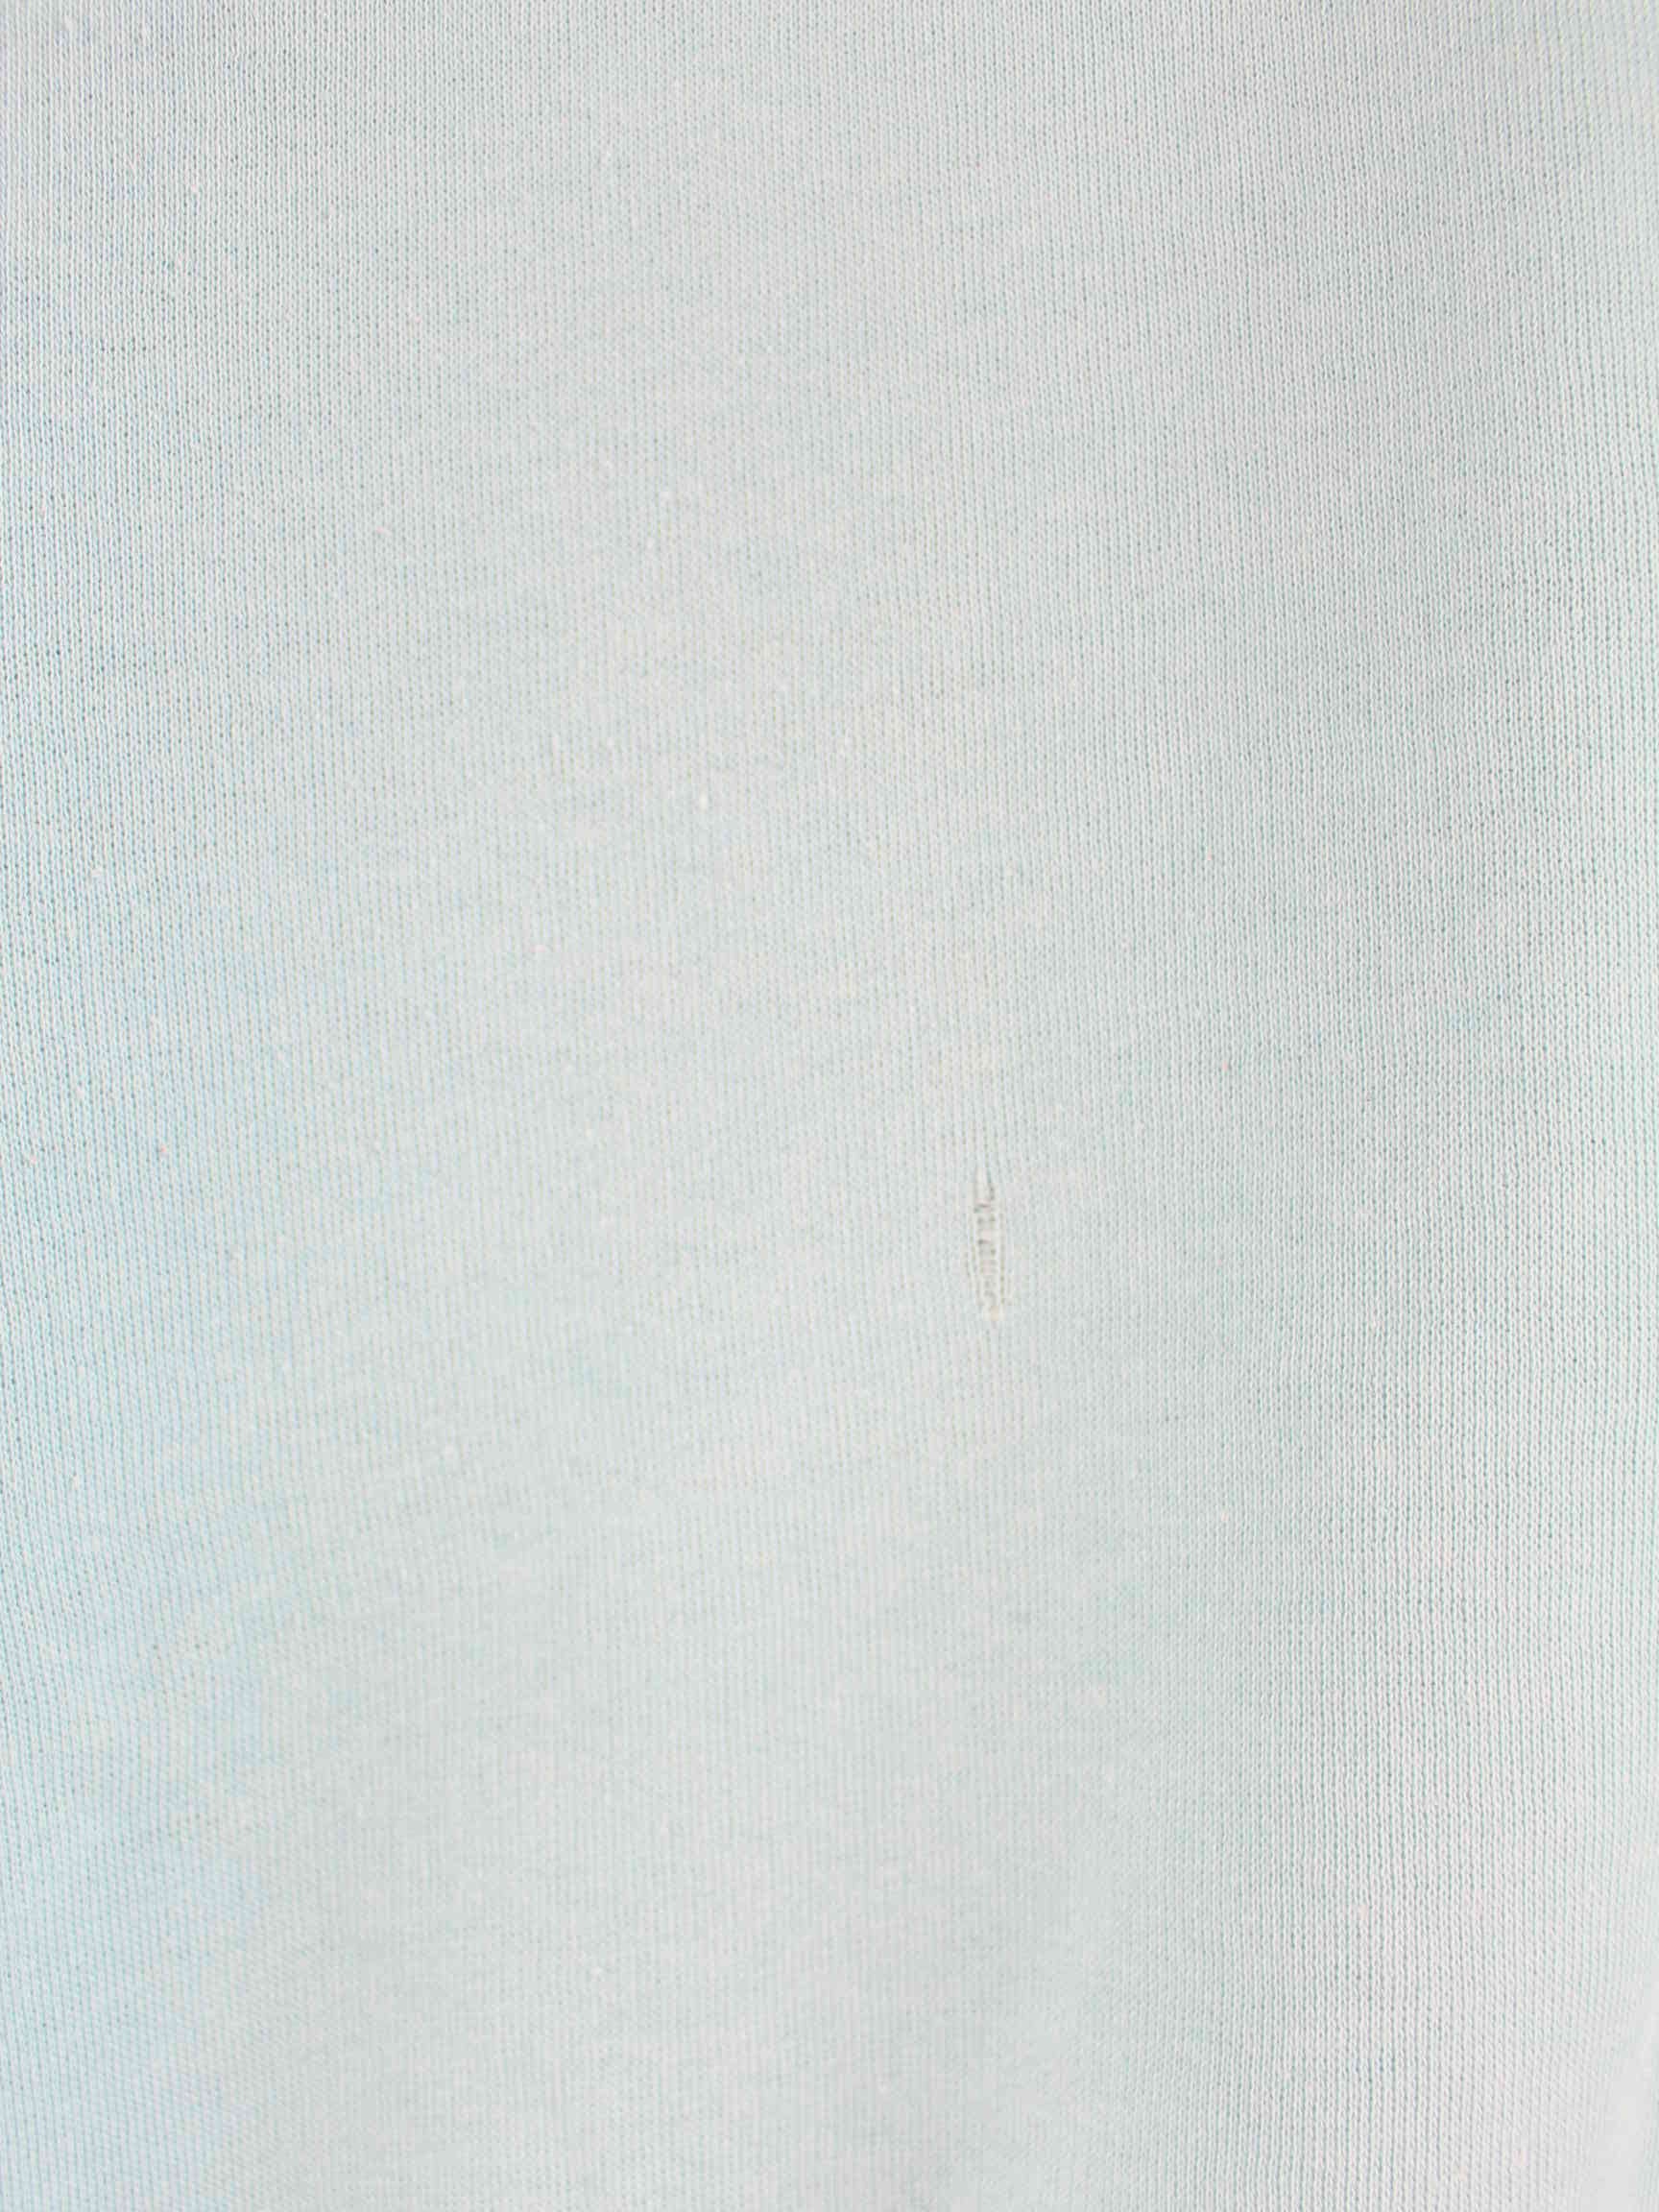 Adidas Damen 80s Vintage Trefoil Print Sweater Blau S (detail image 3)